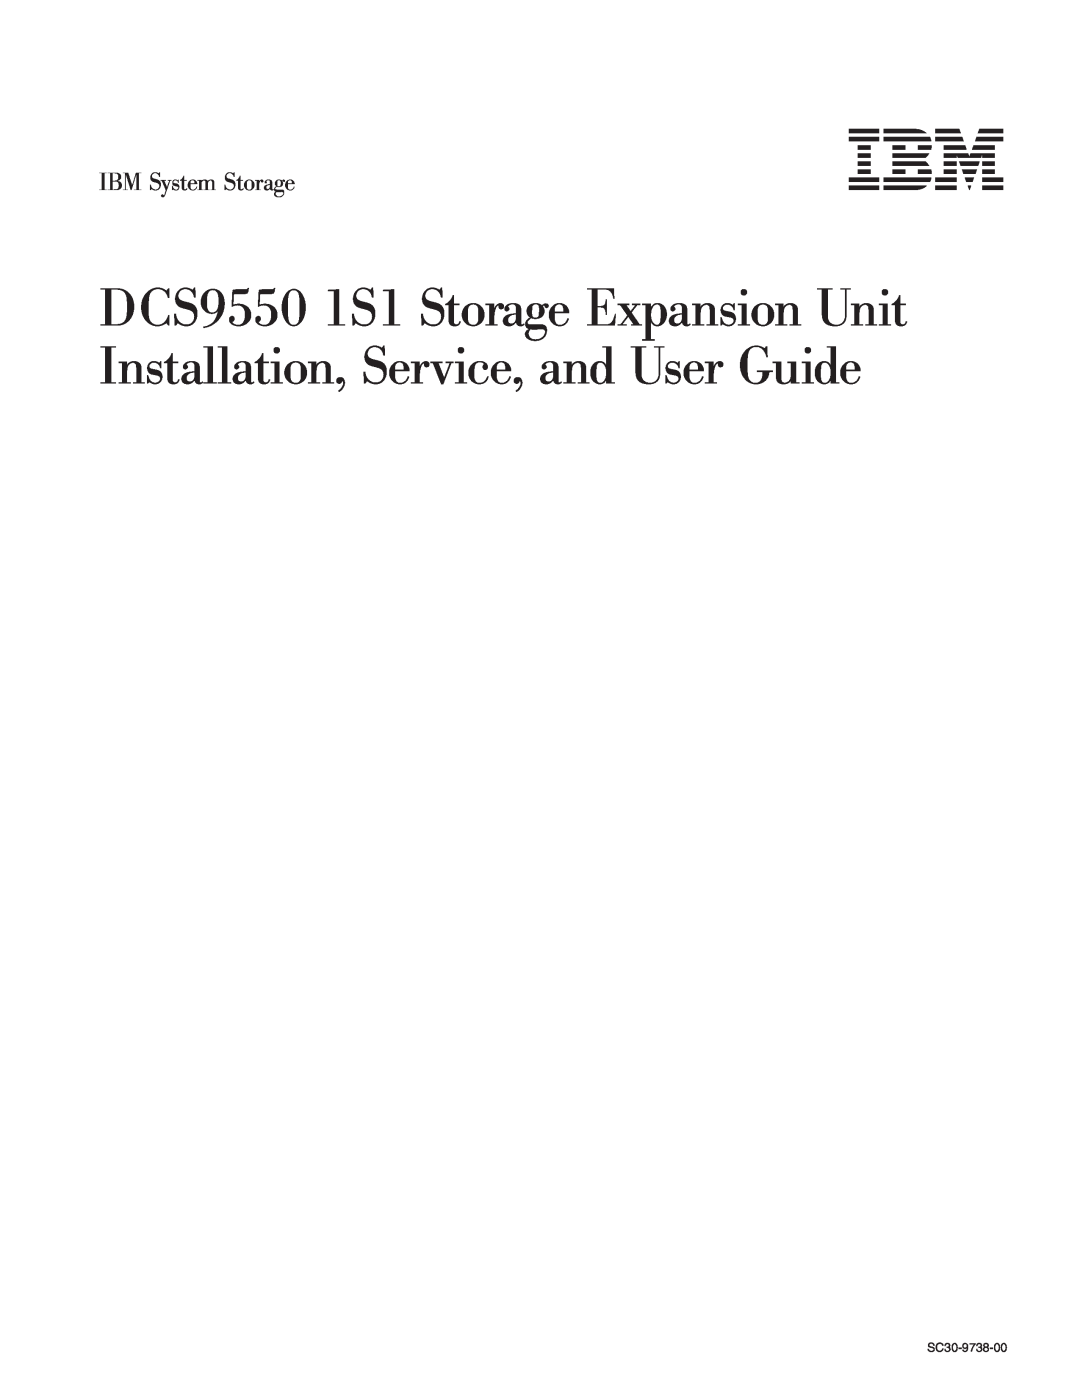 IBM DCS9550 1S1 manual IBM System Storage, SC30-9738-00 